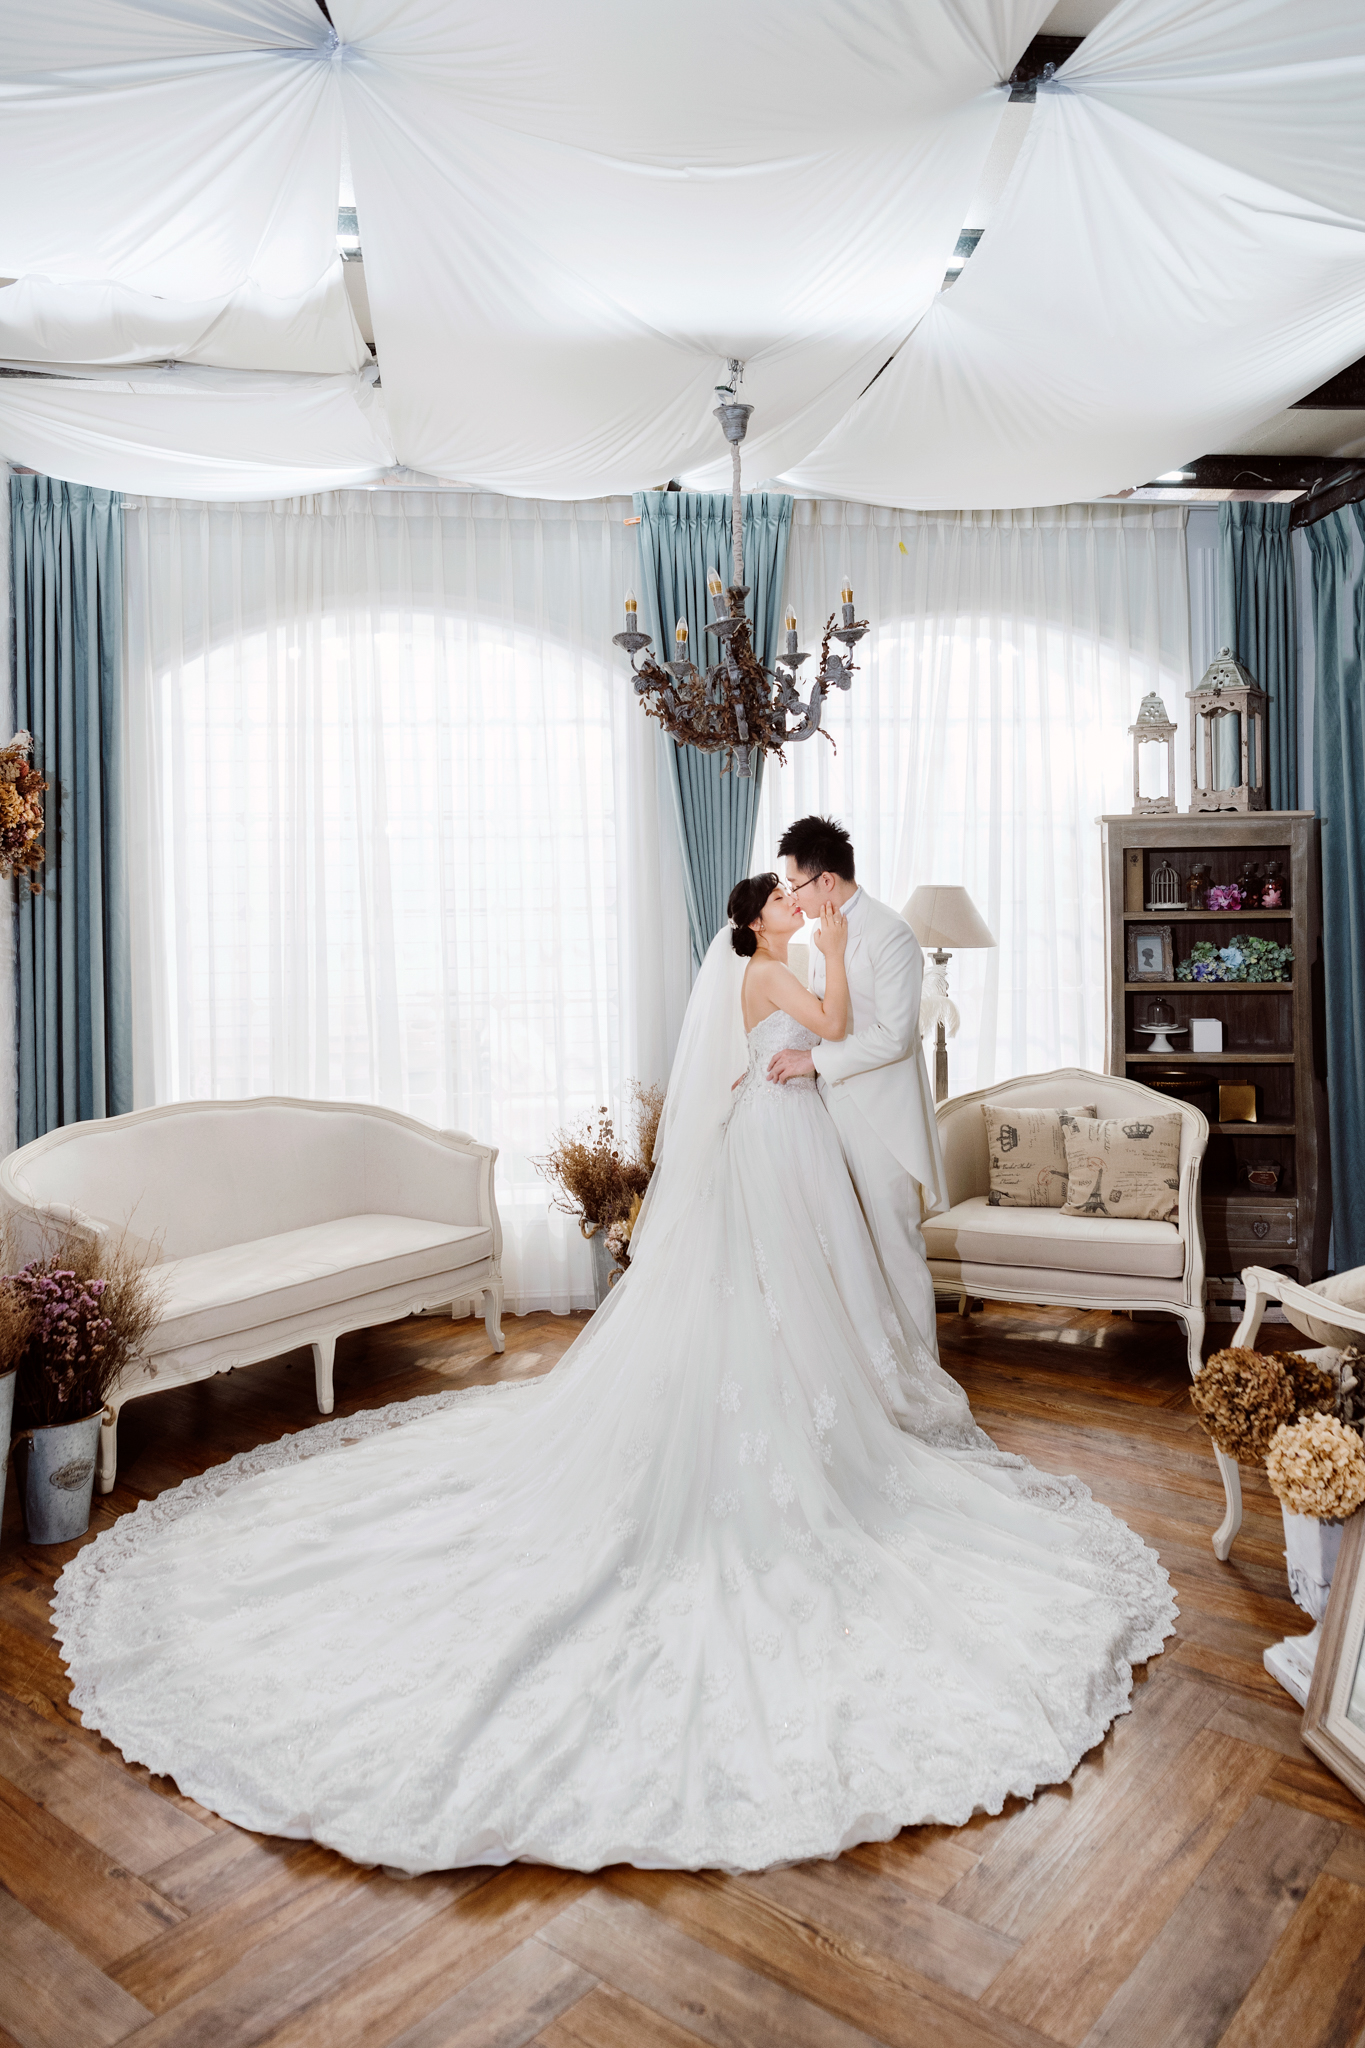 自主婚紗, 東法, 藝術婚紗, Donfer, Donfer Photography, EASTERN WEDDING